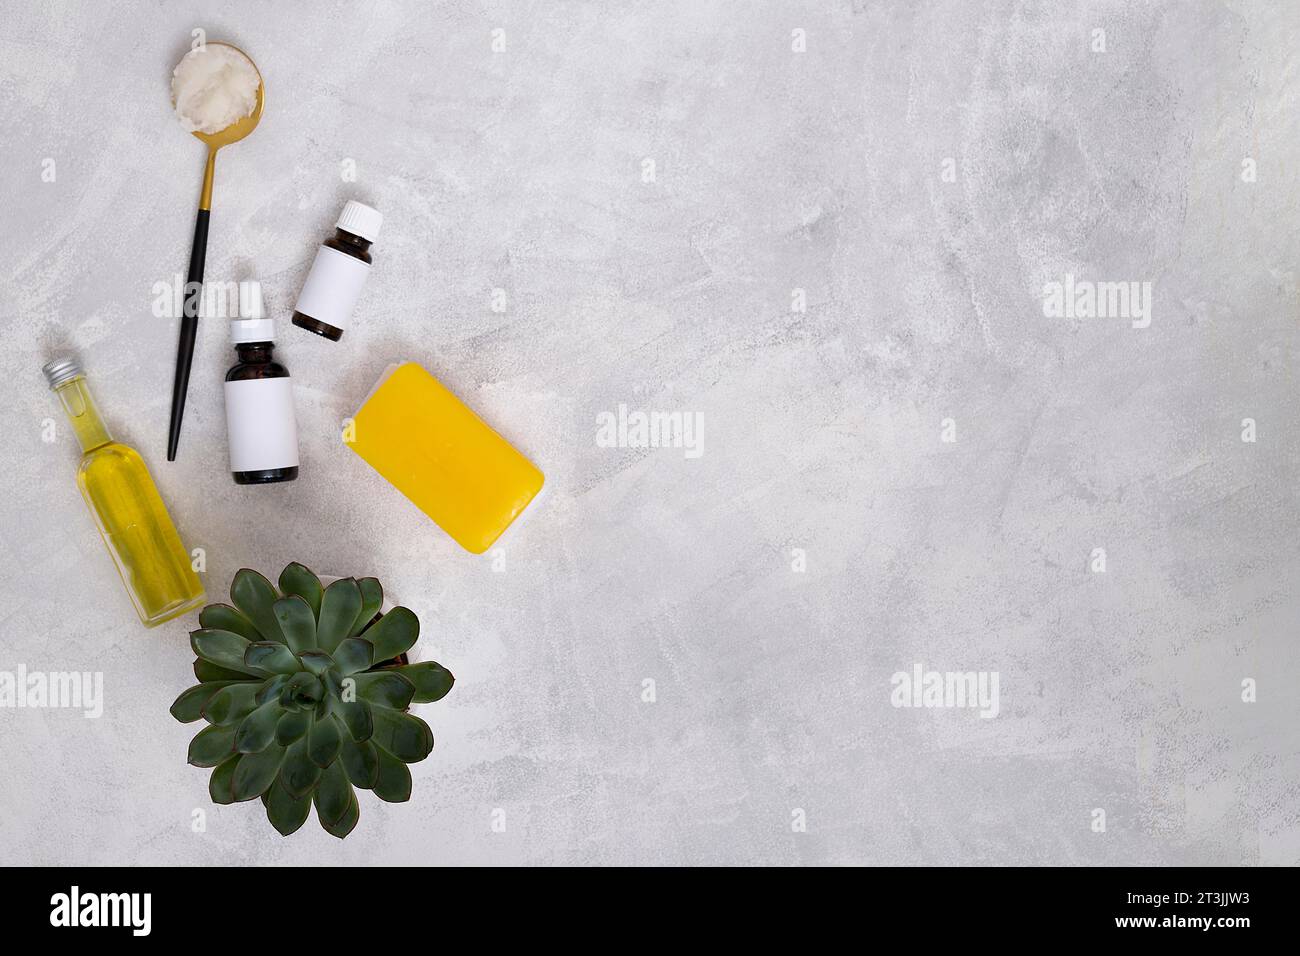 Essential oil bottles cotton yellow soap cactus plant concrete backdrop writing text Stock Photo